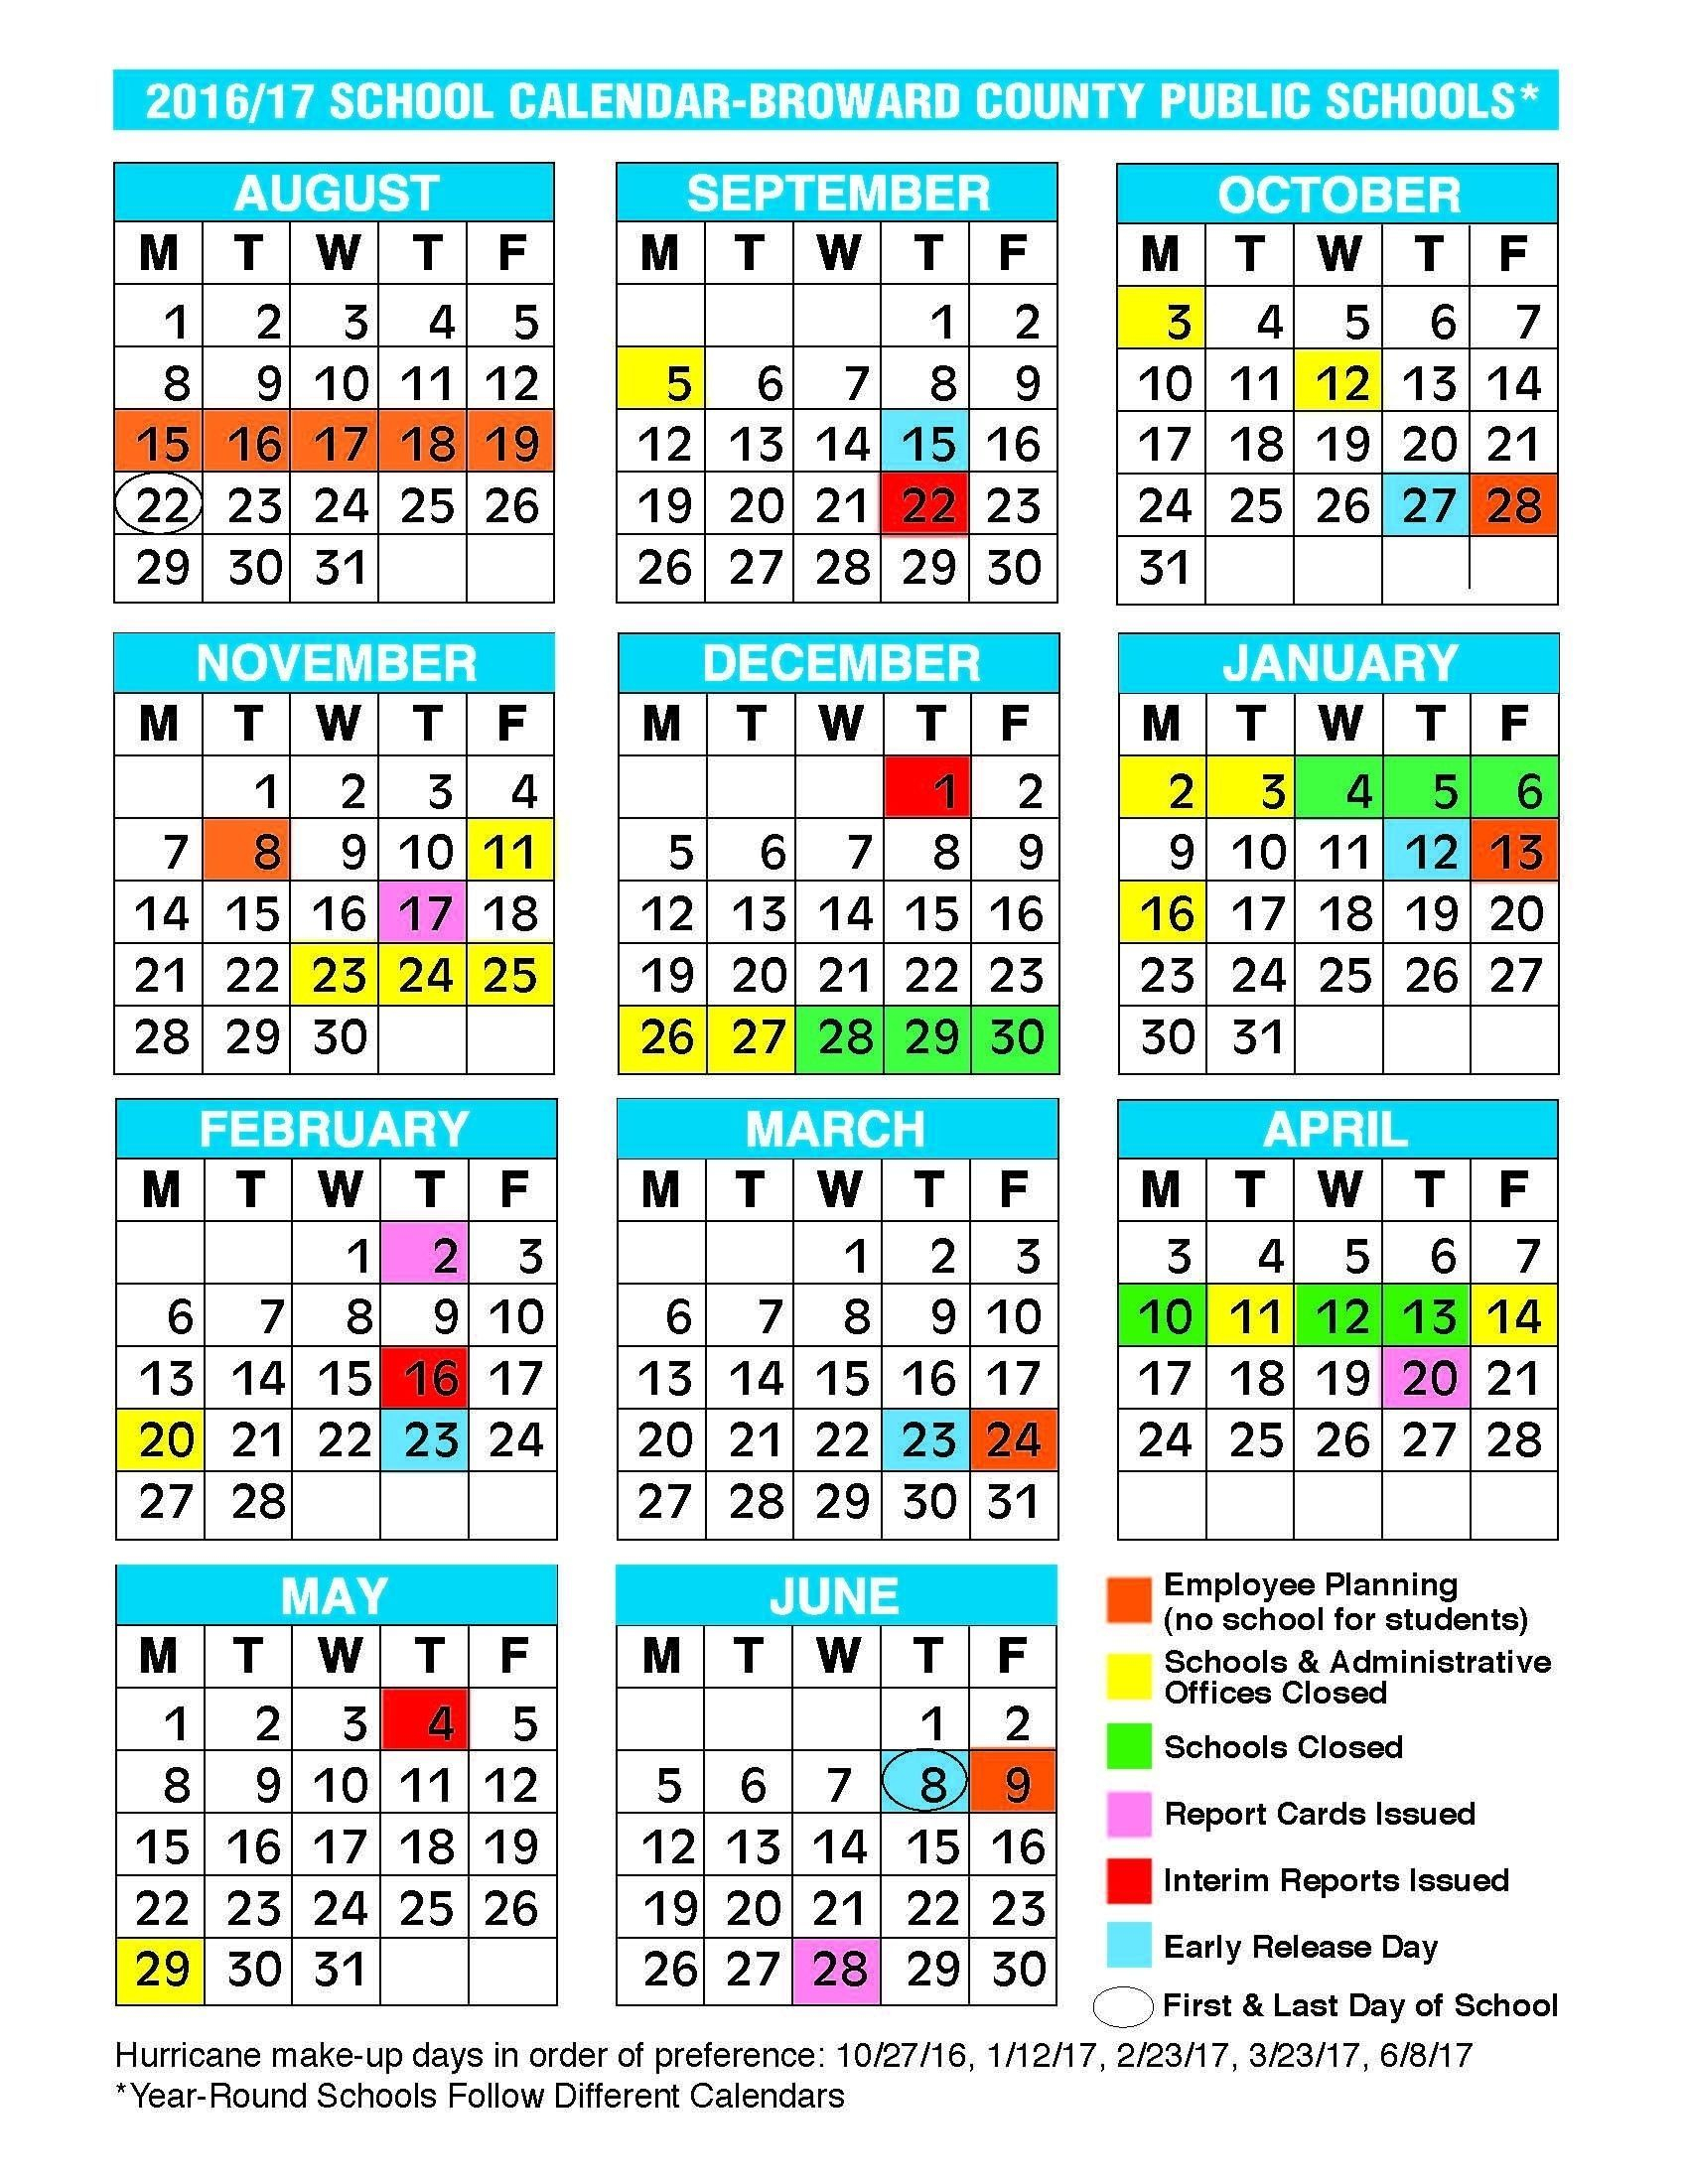 Gwinnett County Schools Calendar 16 17 - Cedric Walters